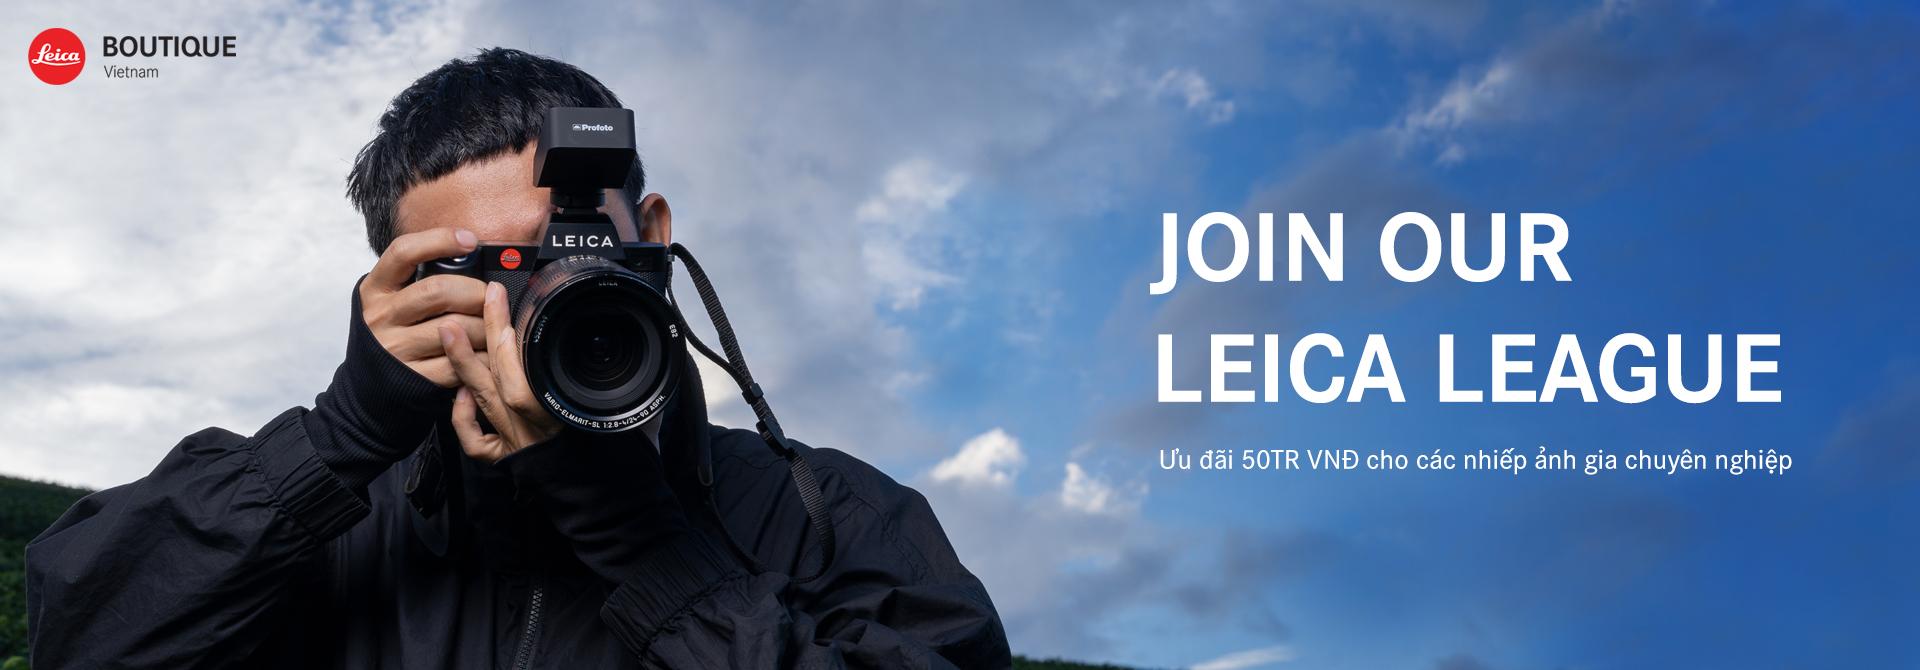 Join Our Leica League